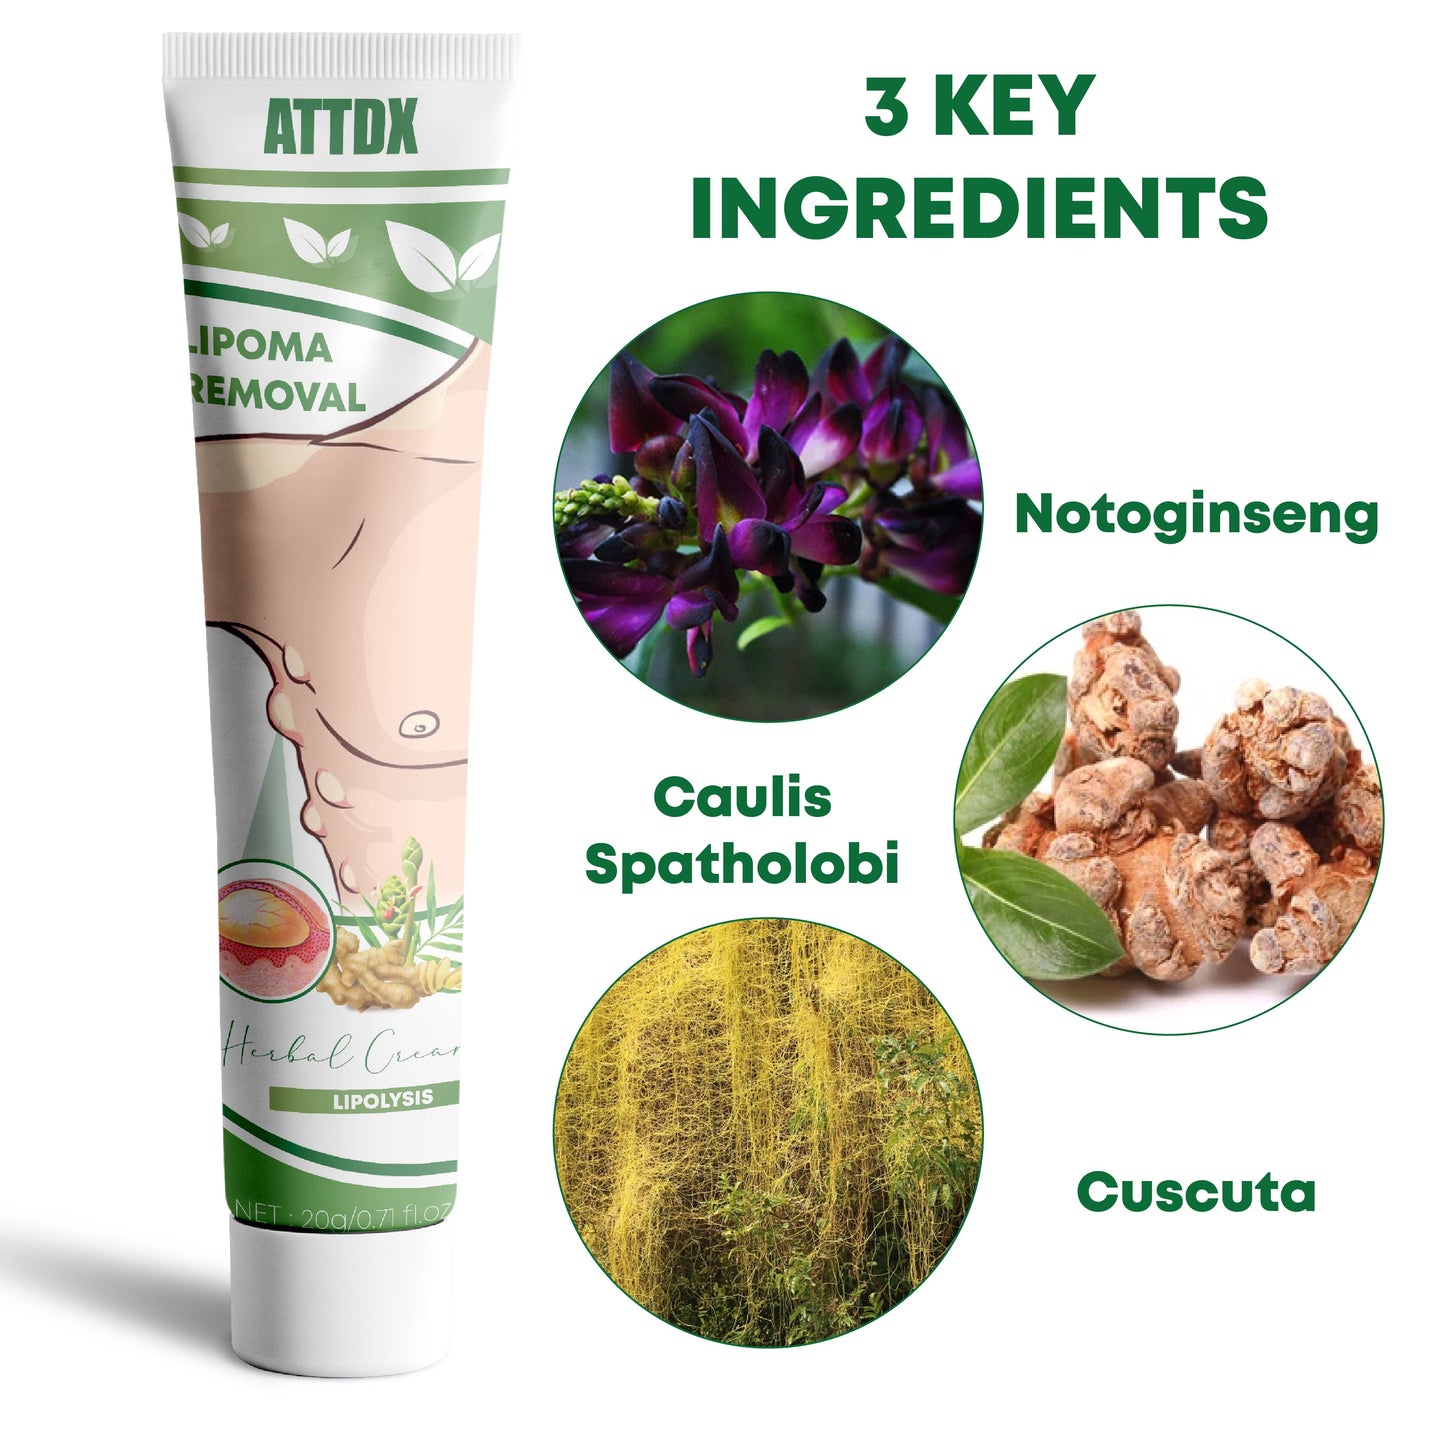 ATTDX LipomaRemoval Herbal Cream